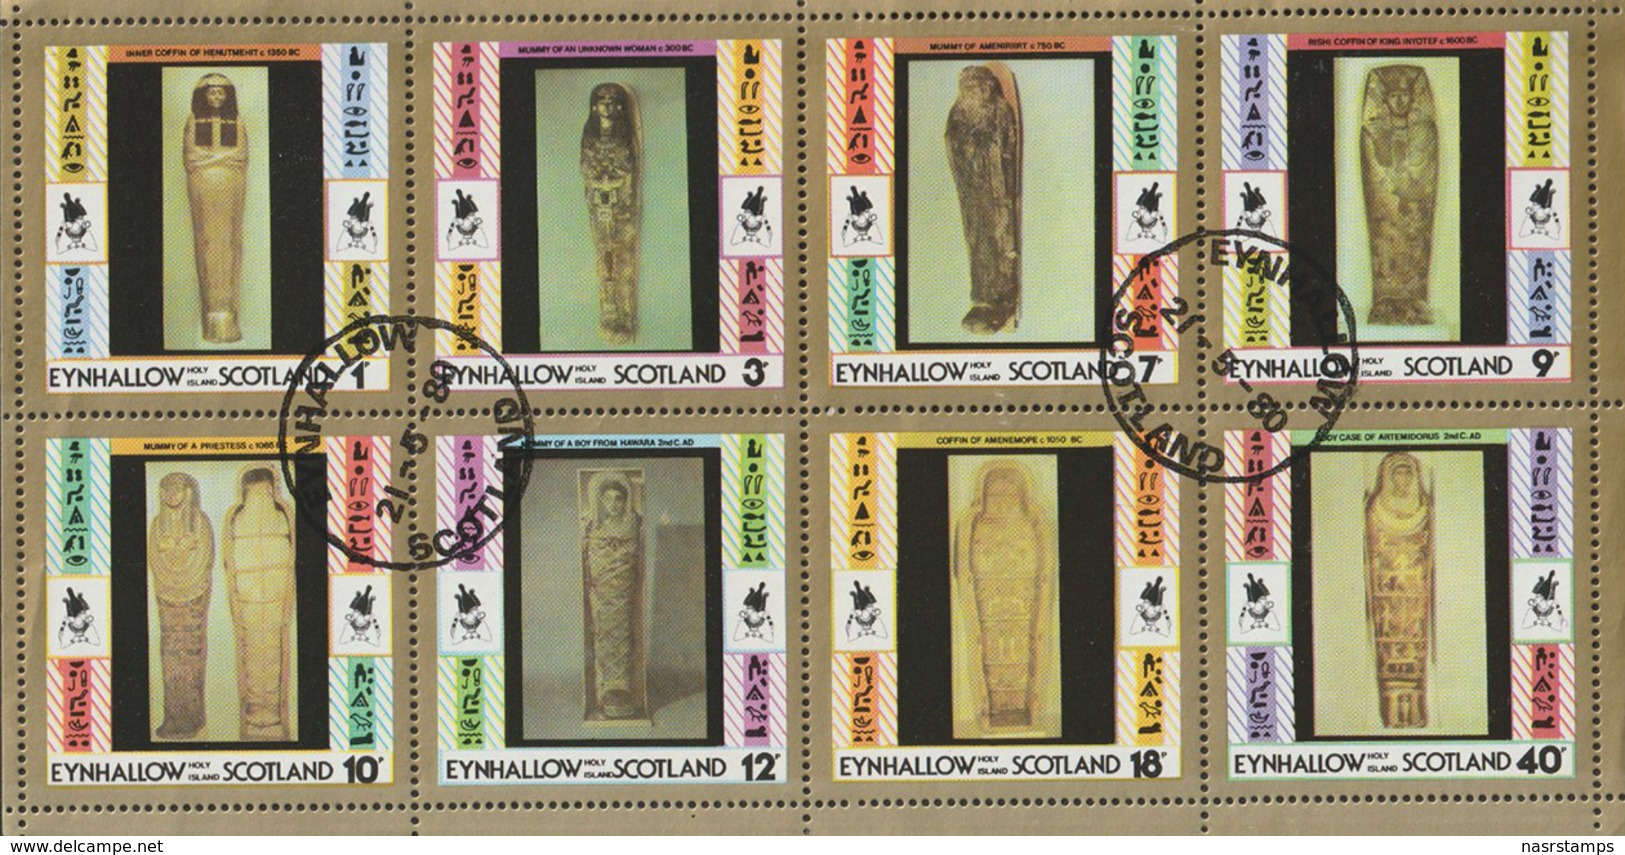 Egyptology - Labels - ( Complete Sheet - Egyptian Art - Egyptology ) - MNH (**) - Aegyptologie